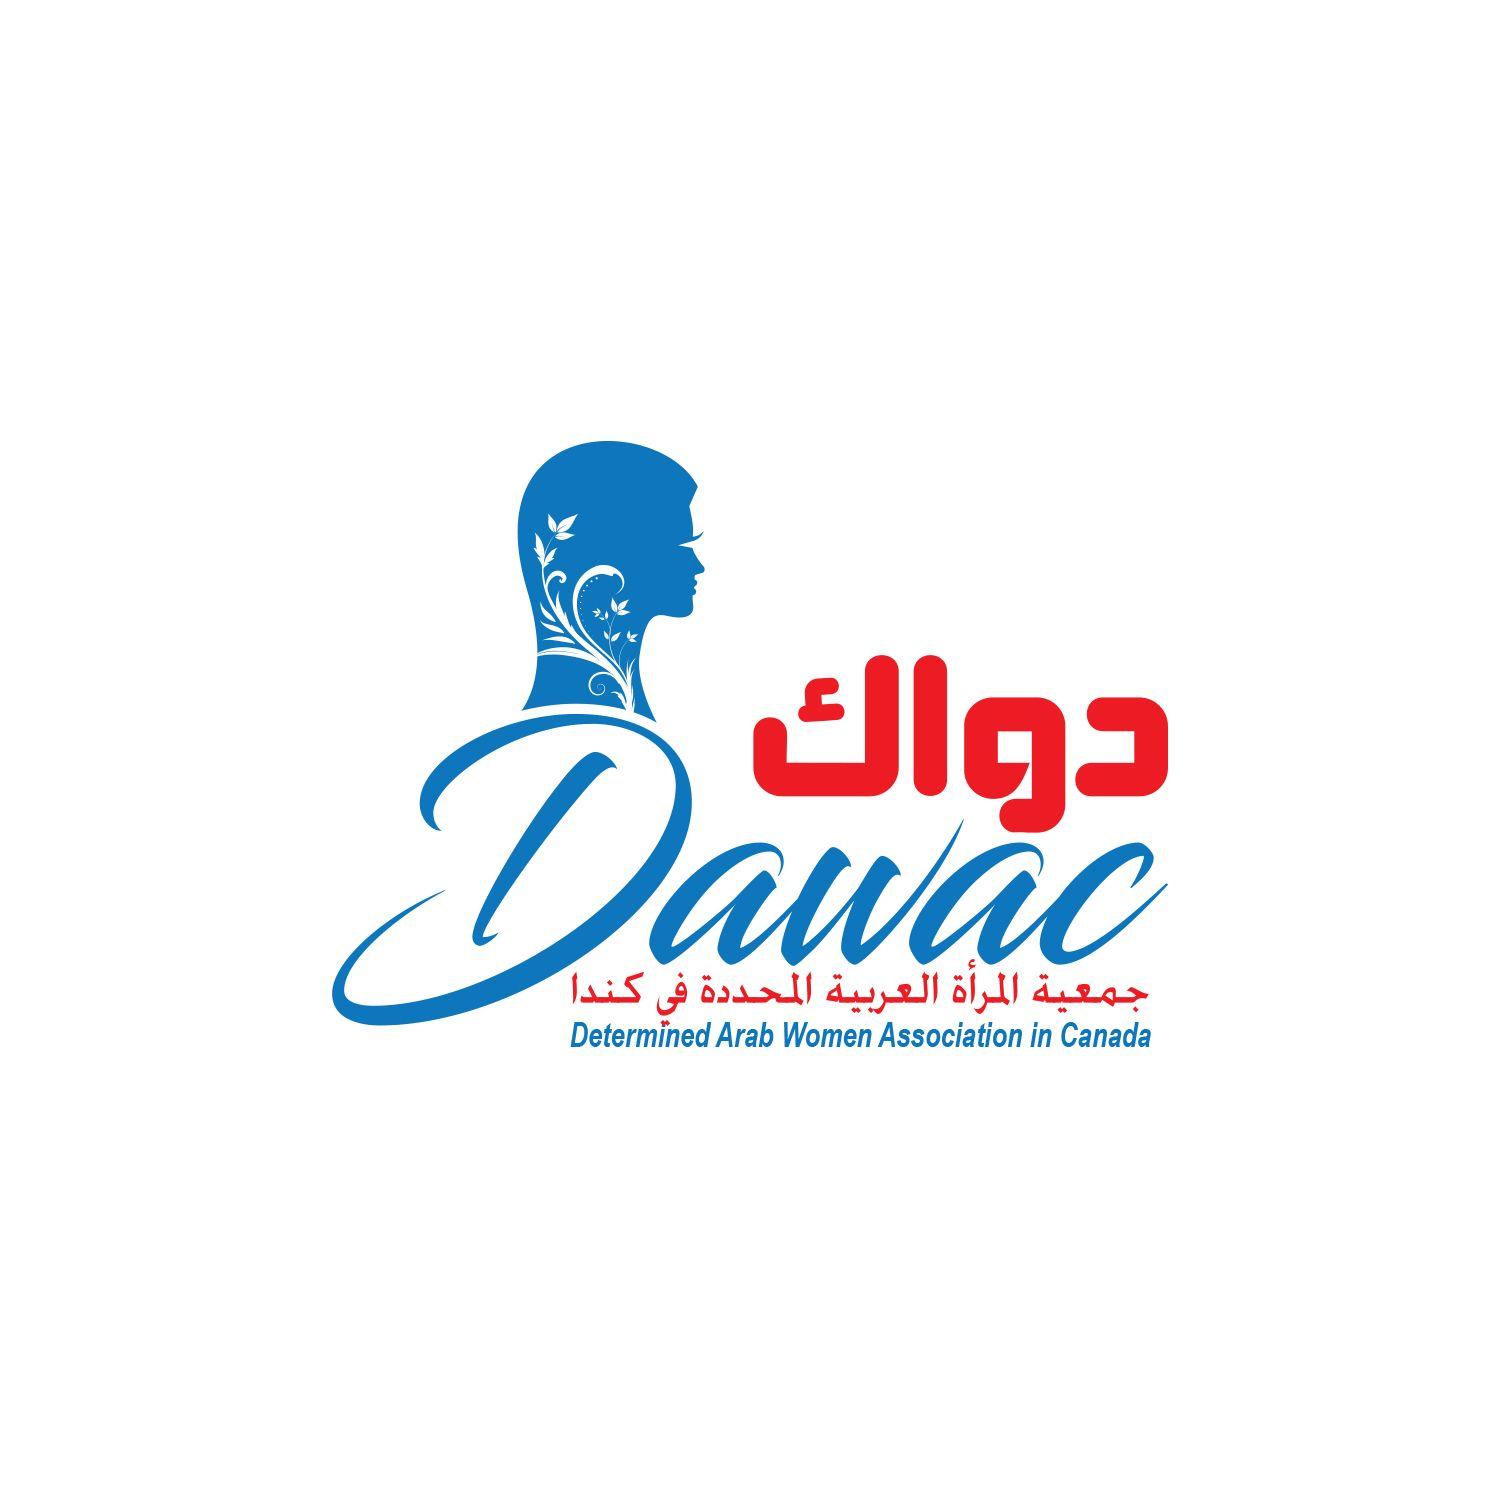 Spelling Logo - Feminine, Traditional Logo Design for DAWAC and its arabic